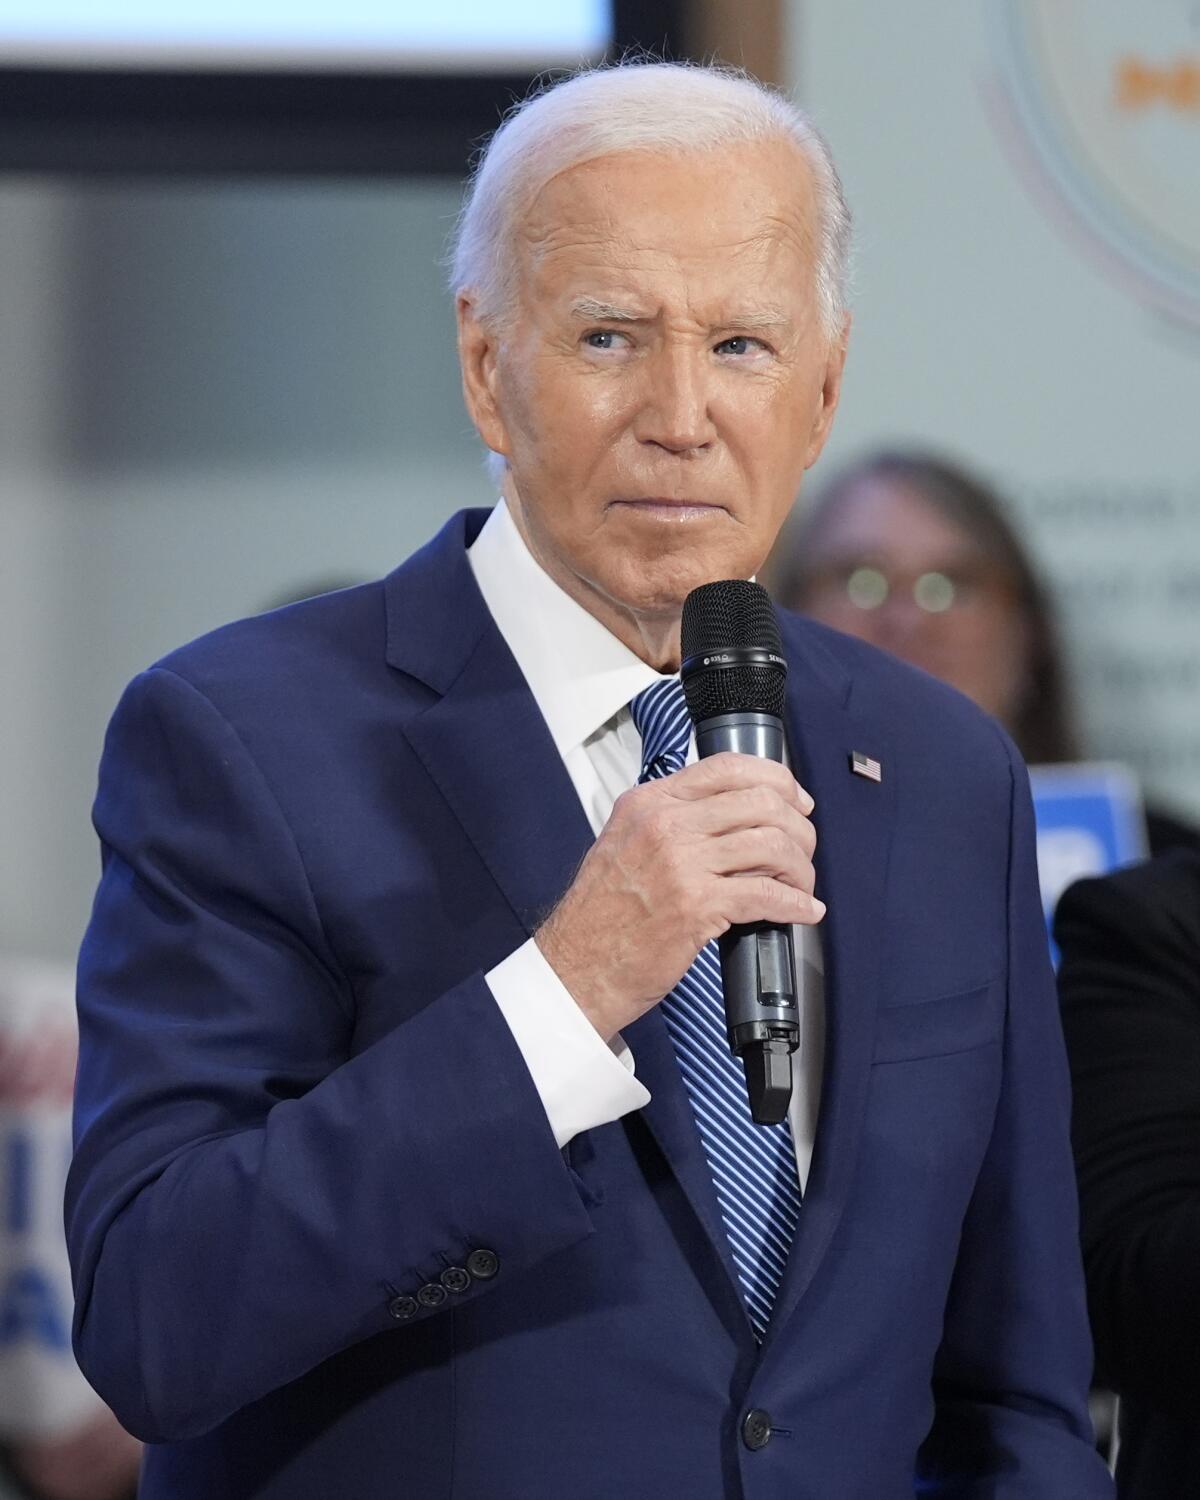 President Biden holds a microphone.